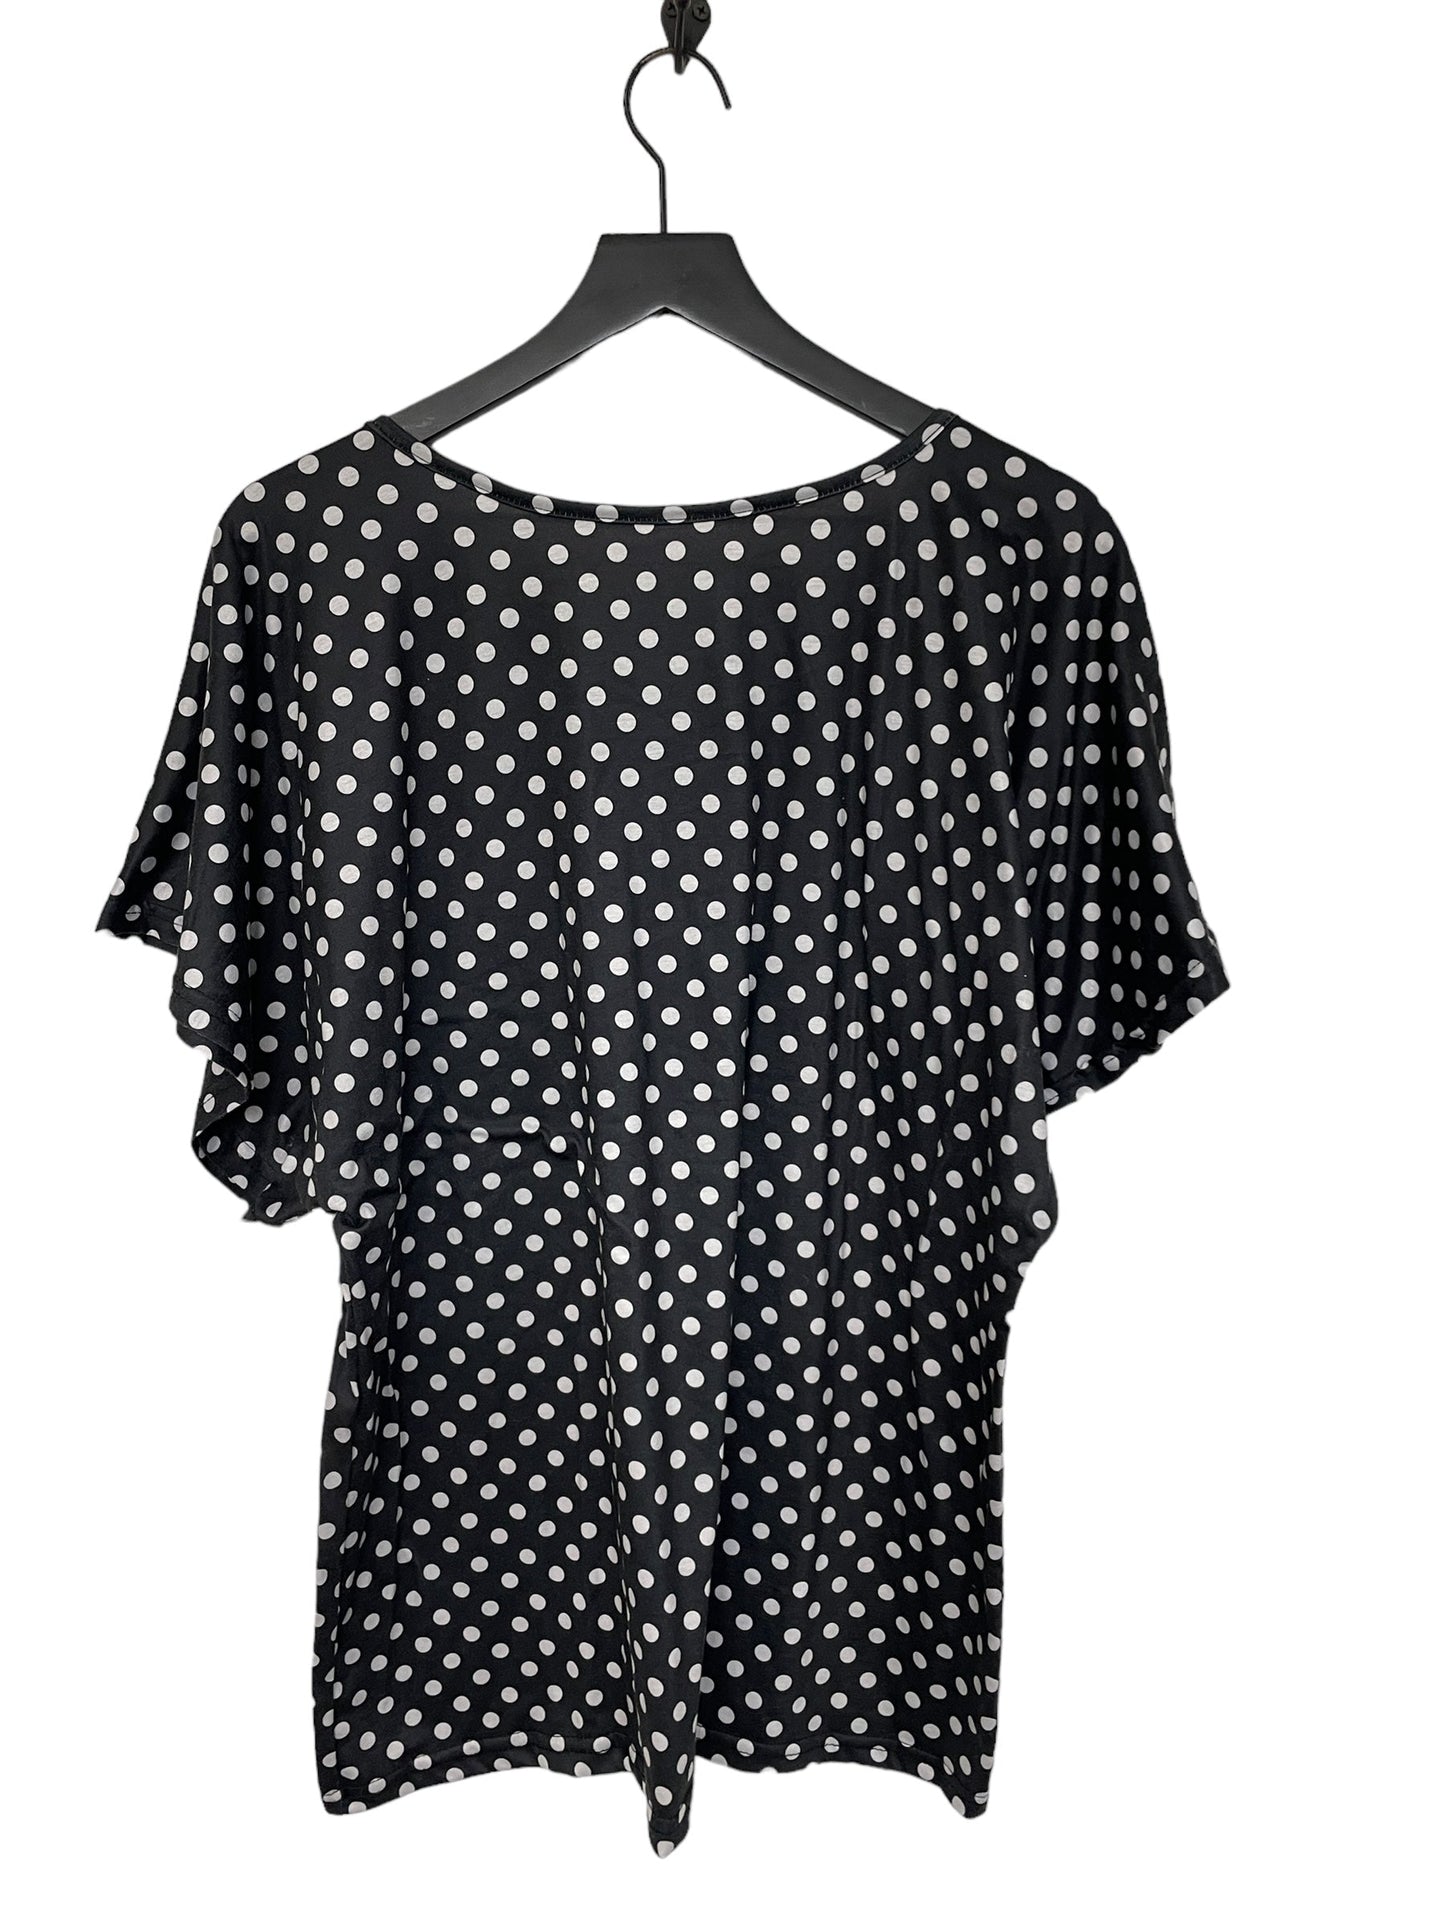 Black & White Top Short Sleeve Basic Cme, Size 2x